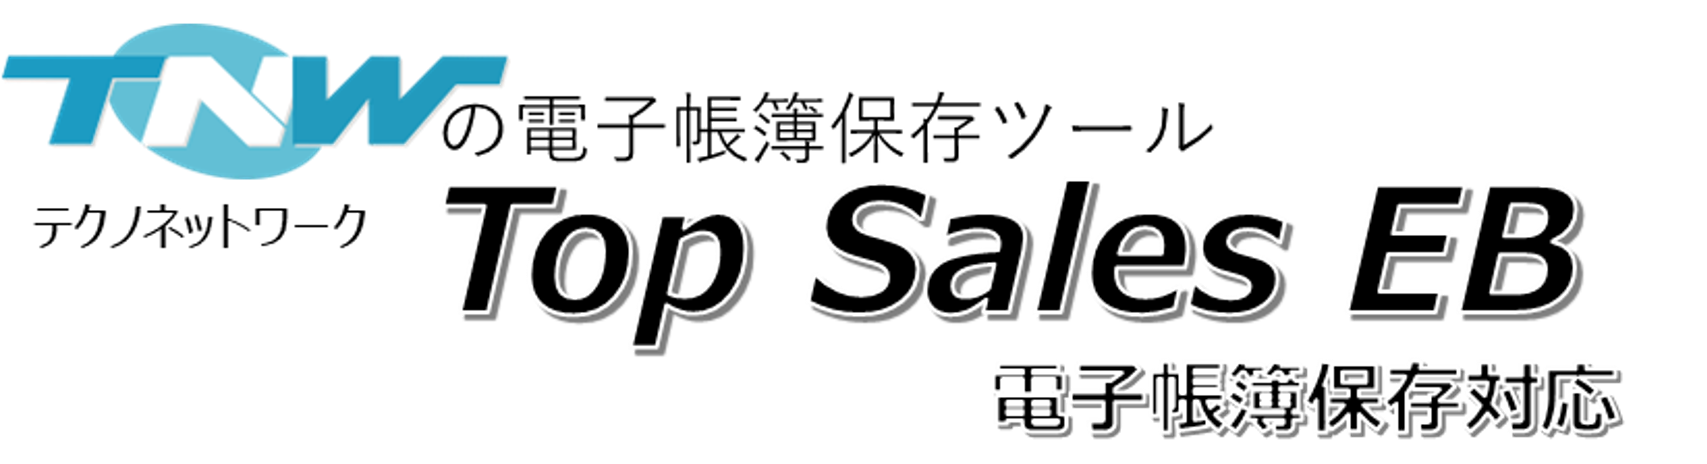 Top Sales EB logo